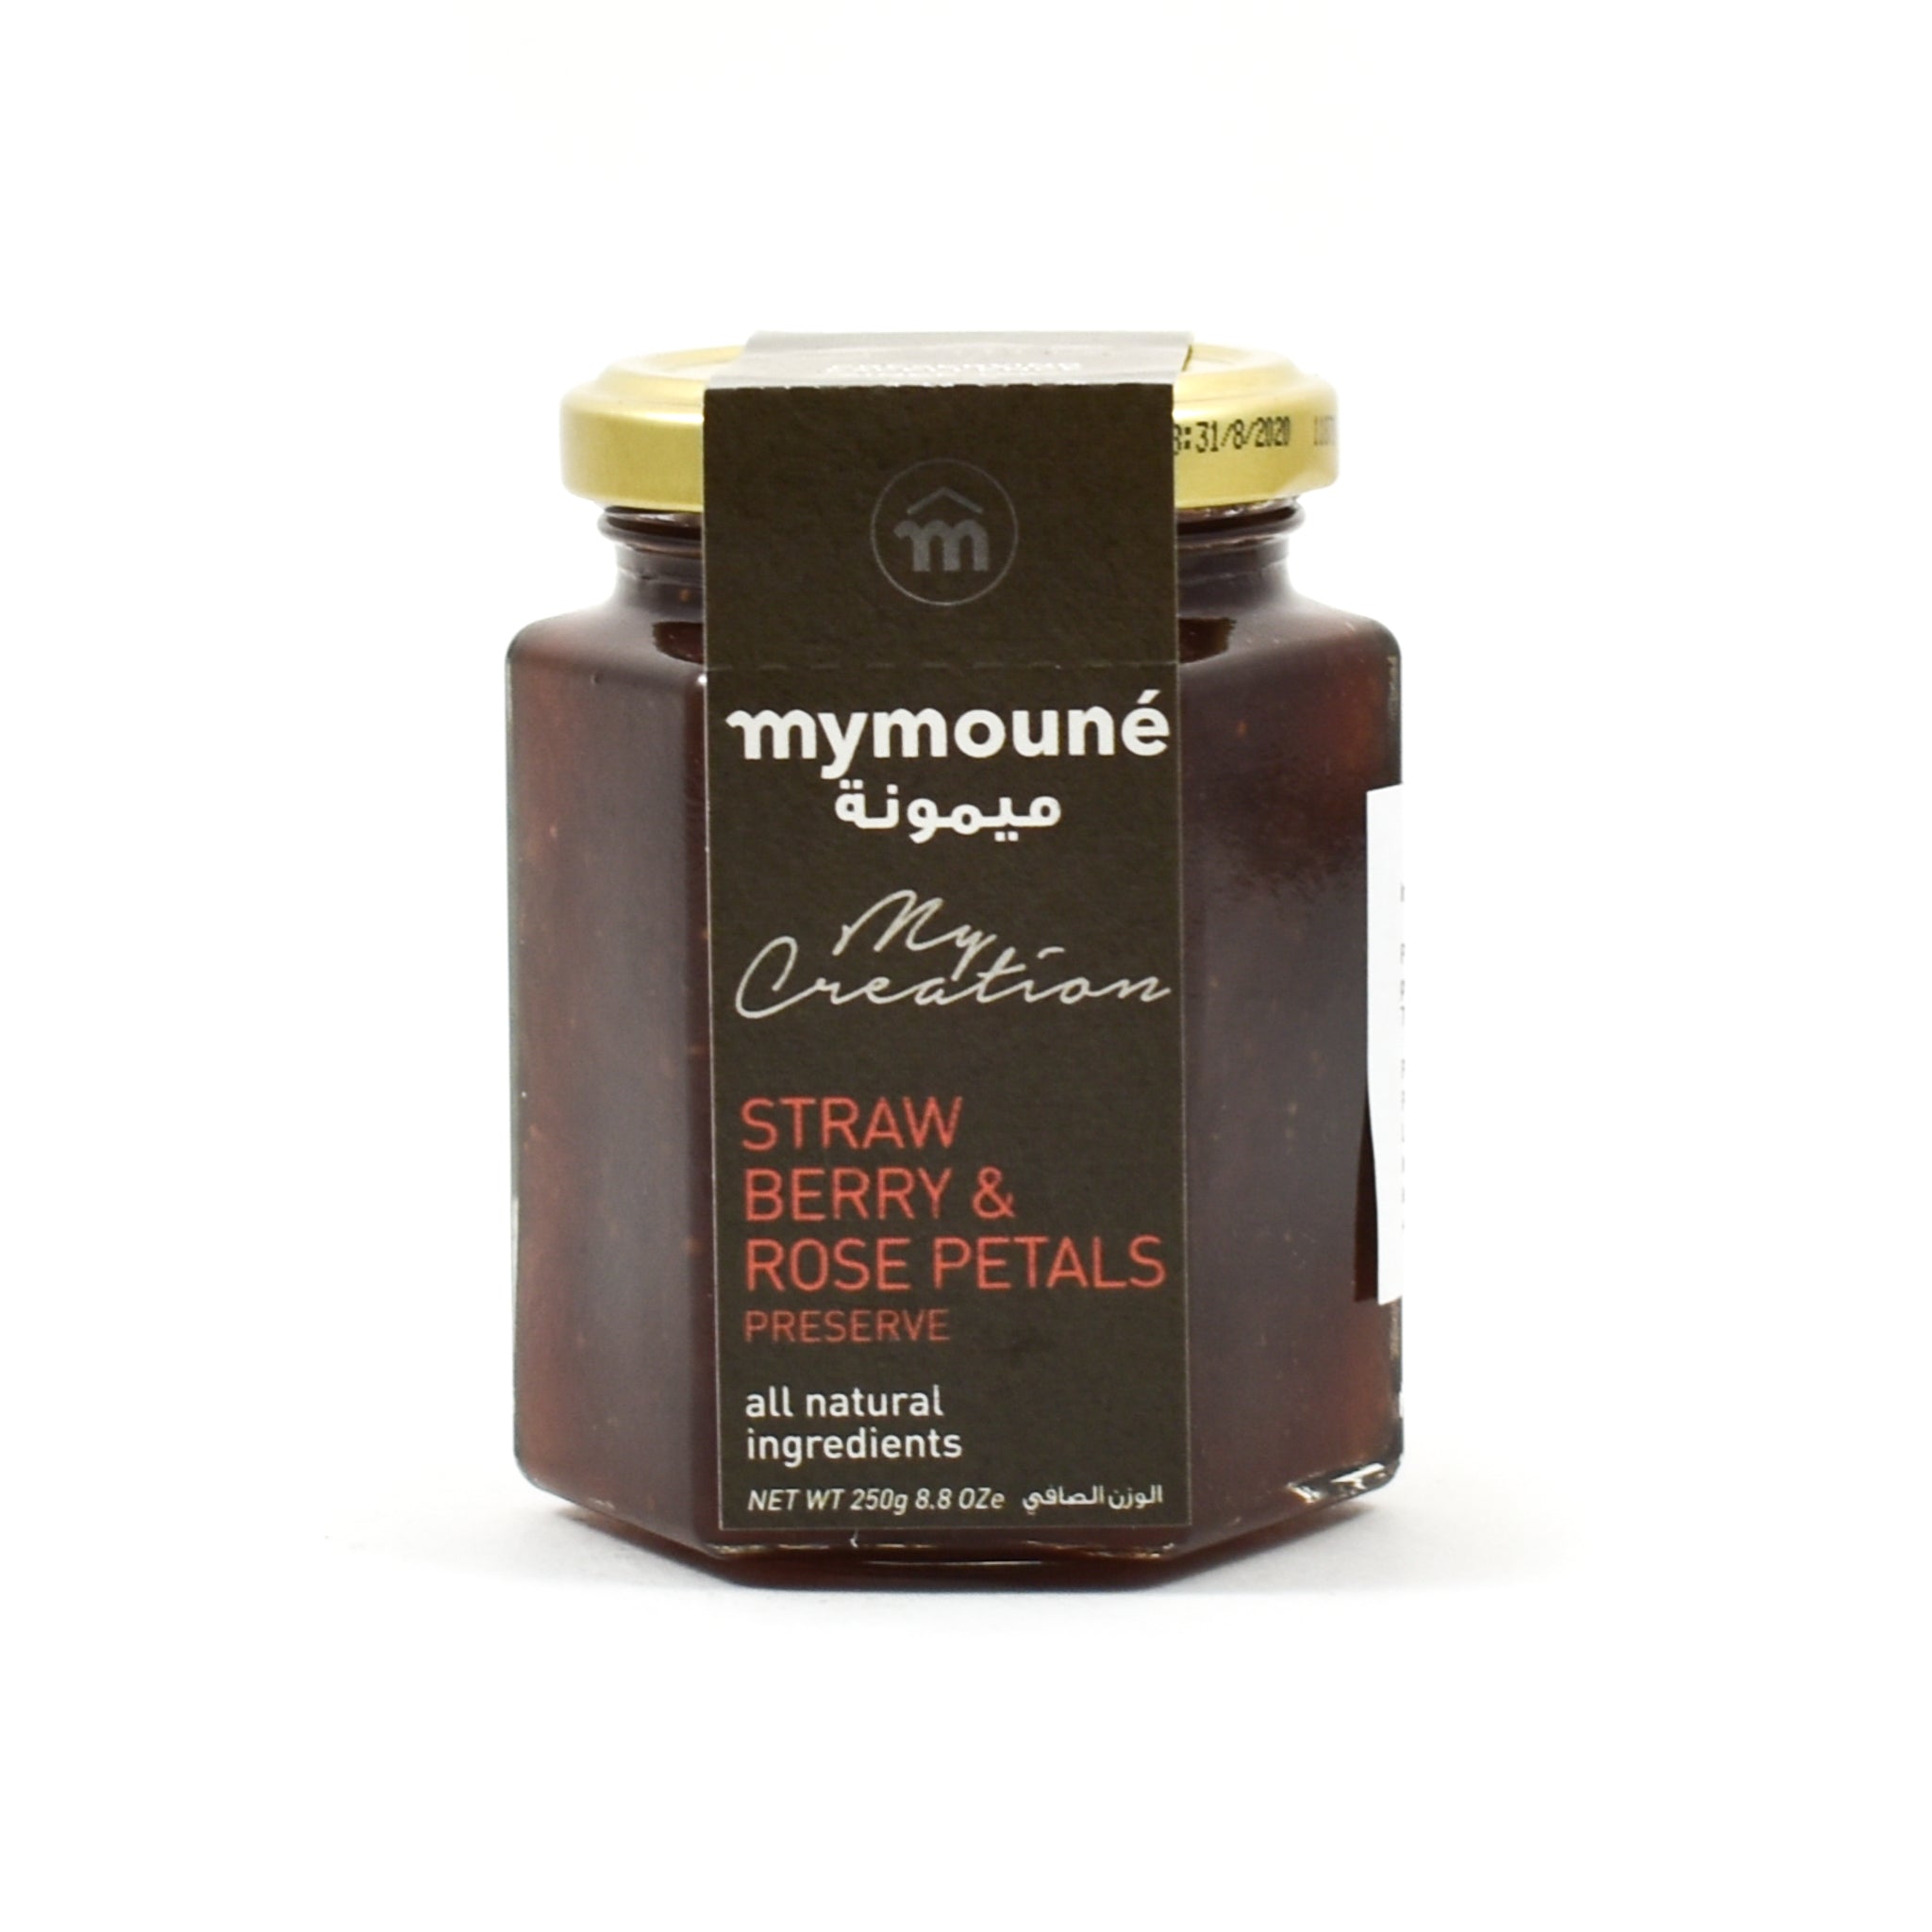 Mymoune Strawberry & Rose Petal Jam 250g Ingredients Jam Honey & Preserves